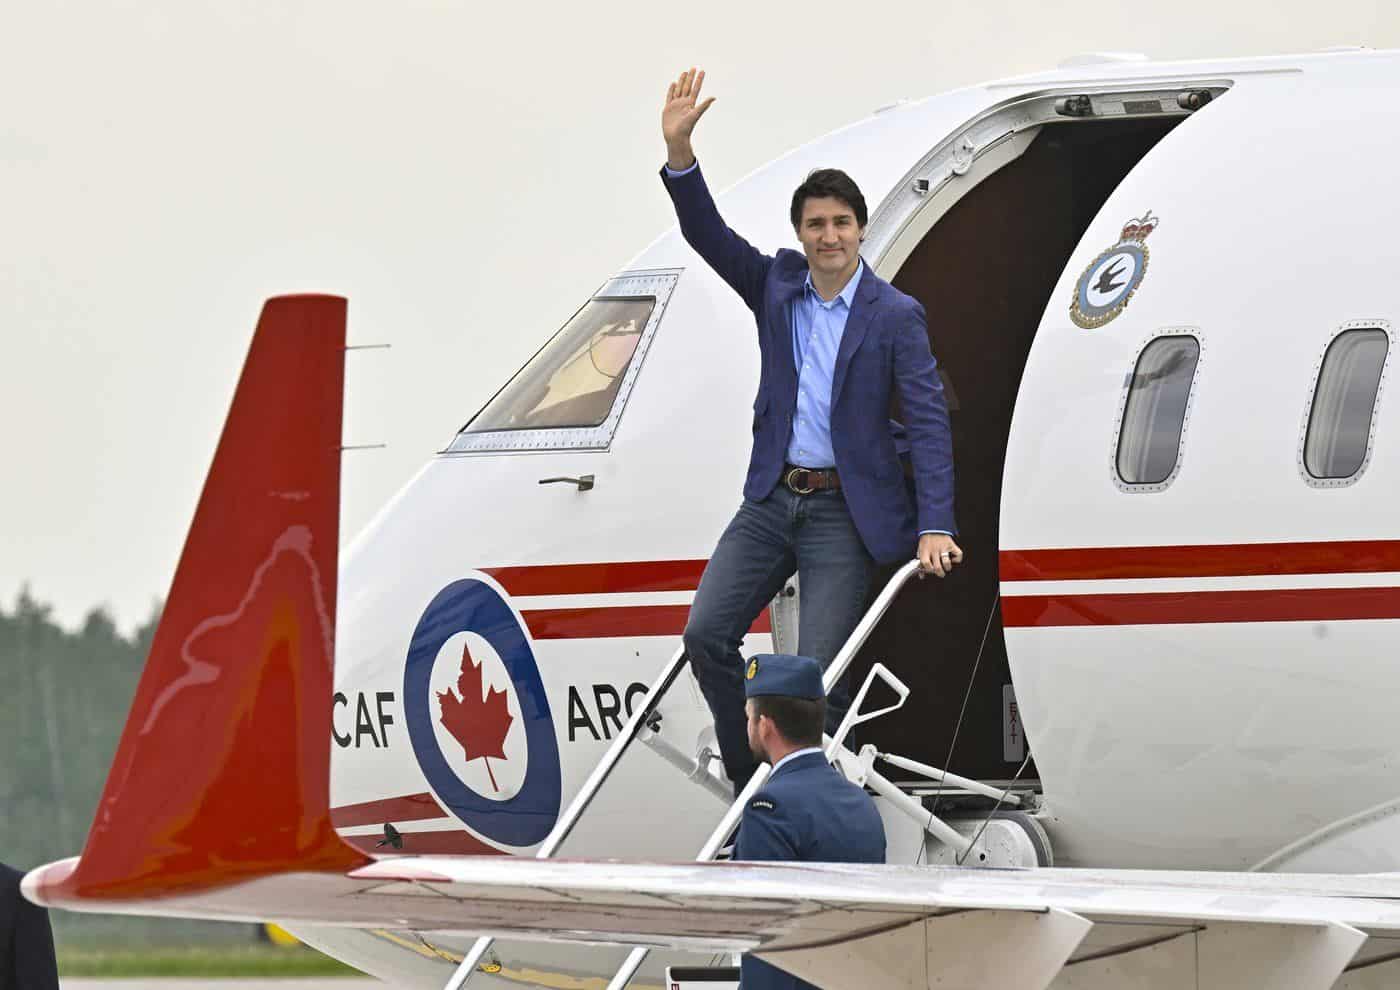 Prime Minister Trudeau's plane breaks down in Jamaica